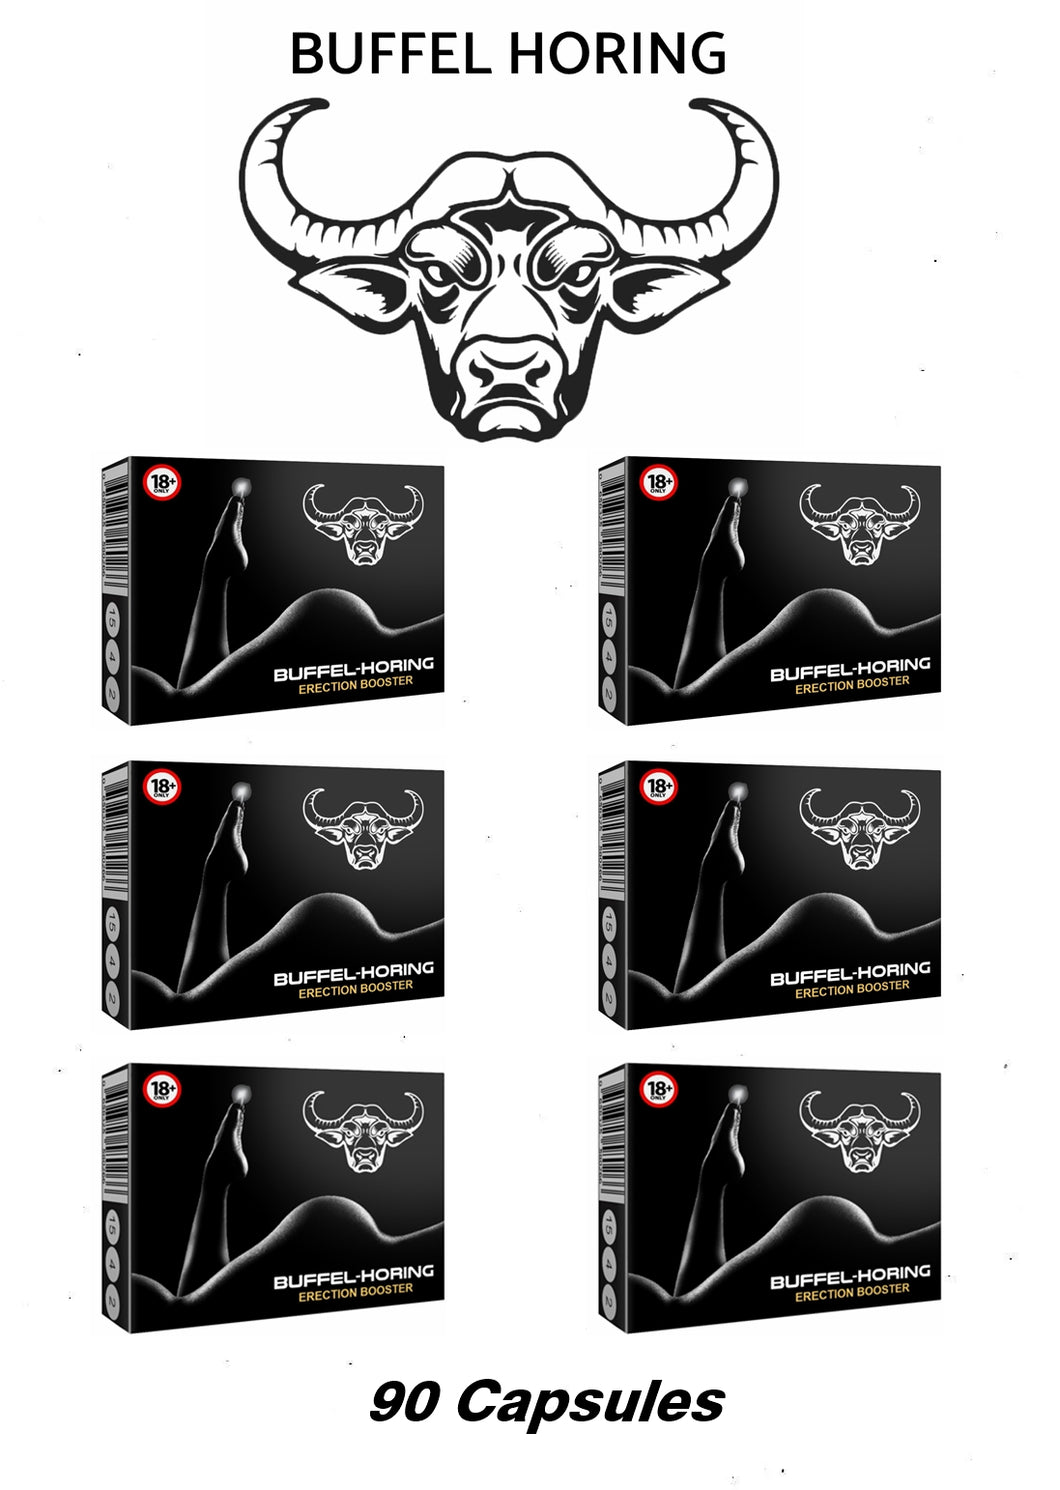 Buffel-Horing(6 Boxes) - 90 Capsules